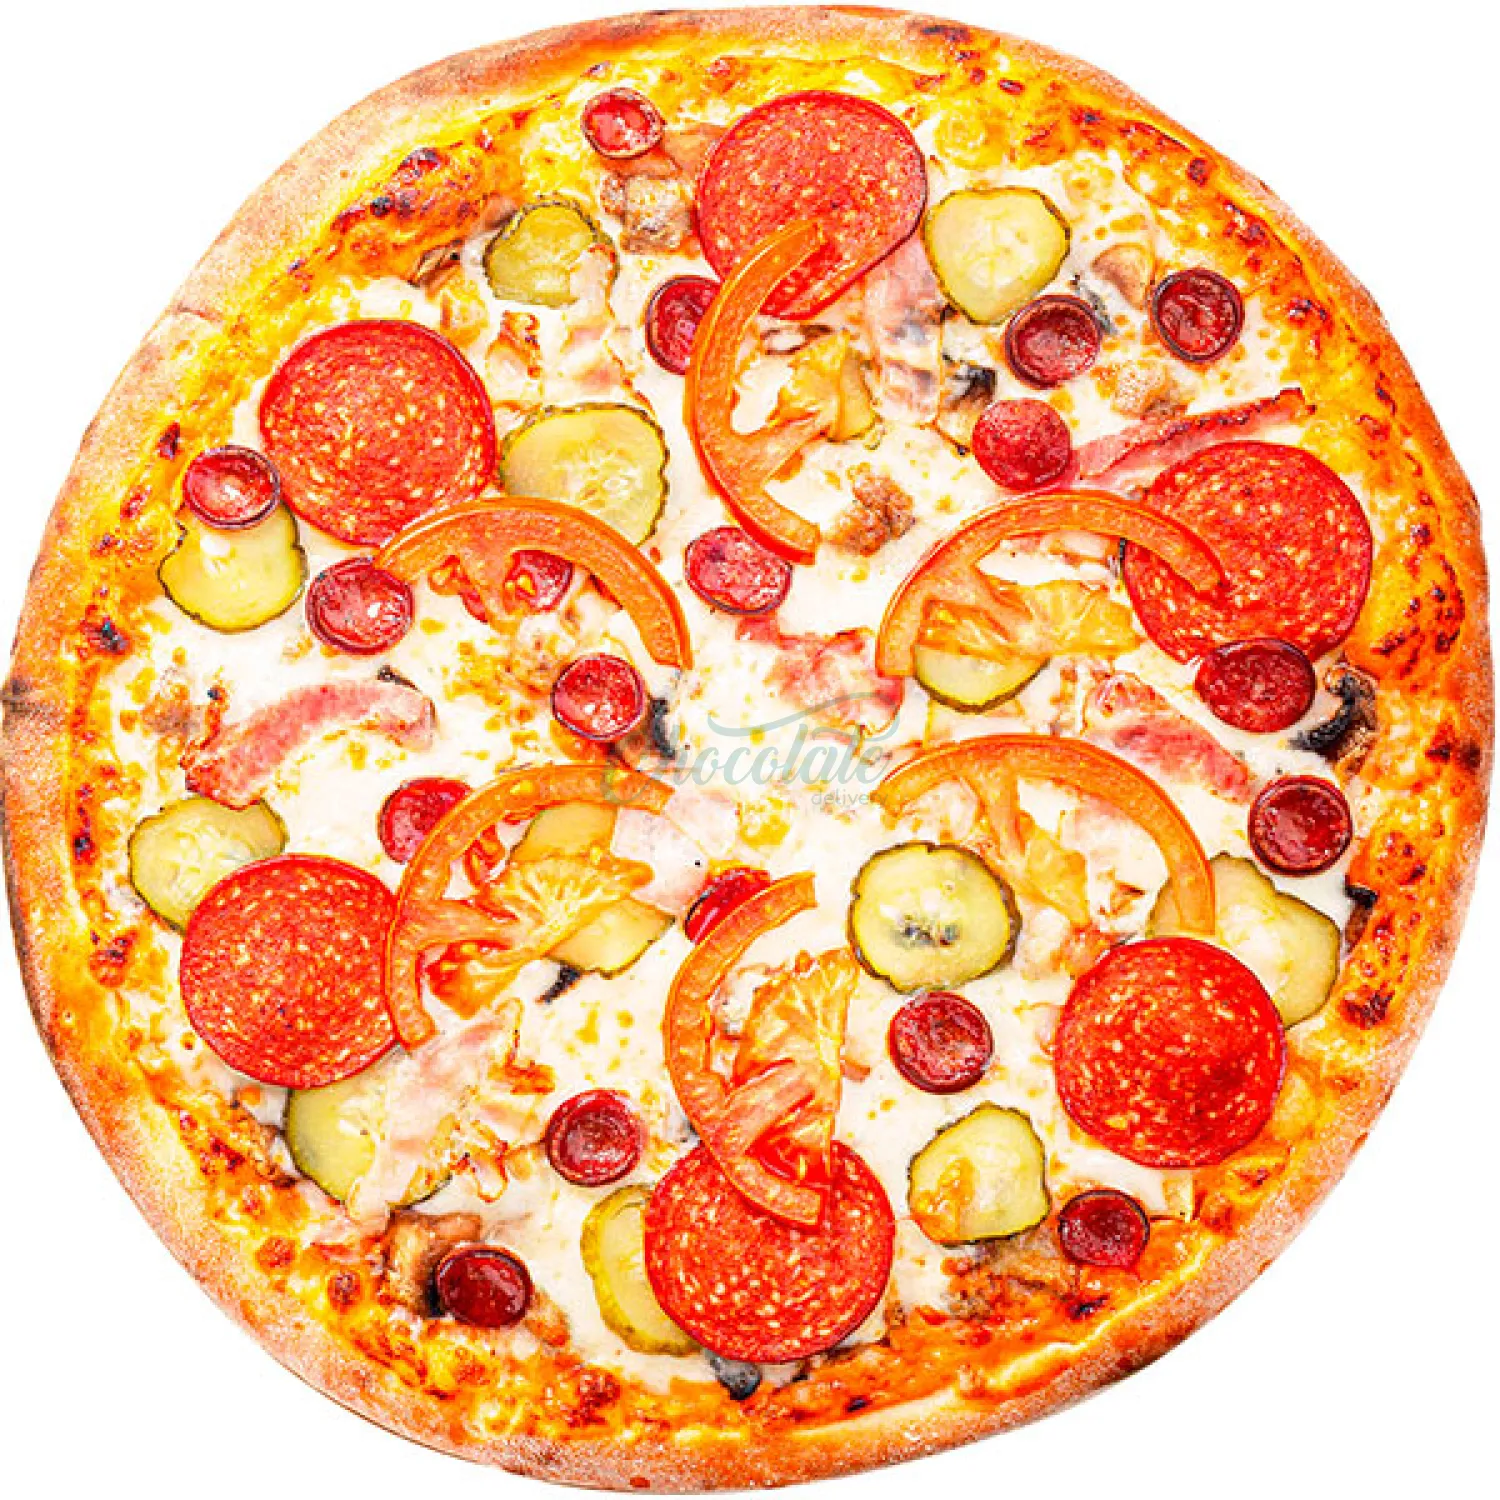 сколько стоит пицца пепперони в среднем фото 15